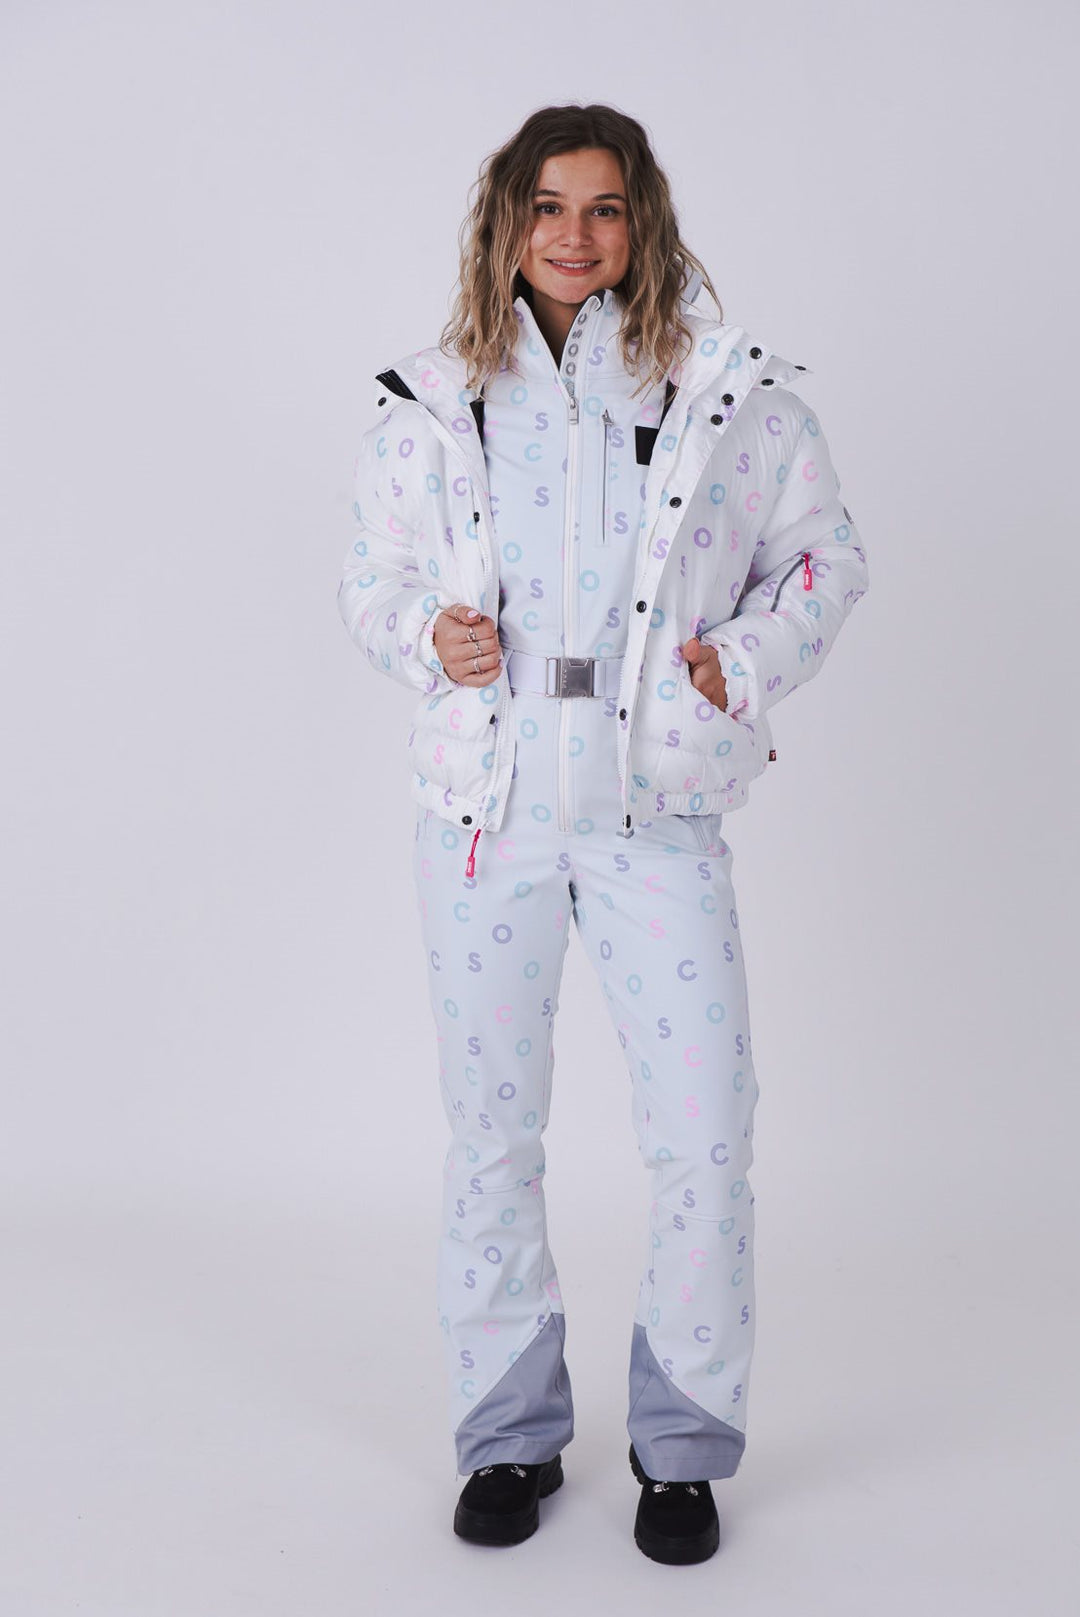 White OOSC Print Chic Ski Suit